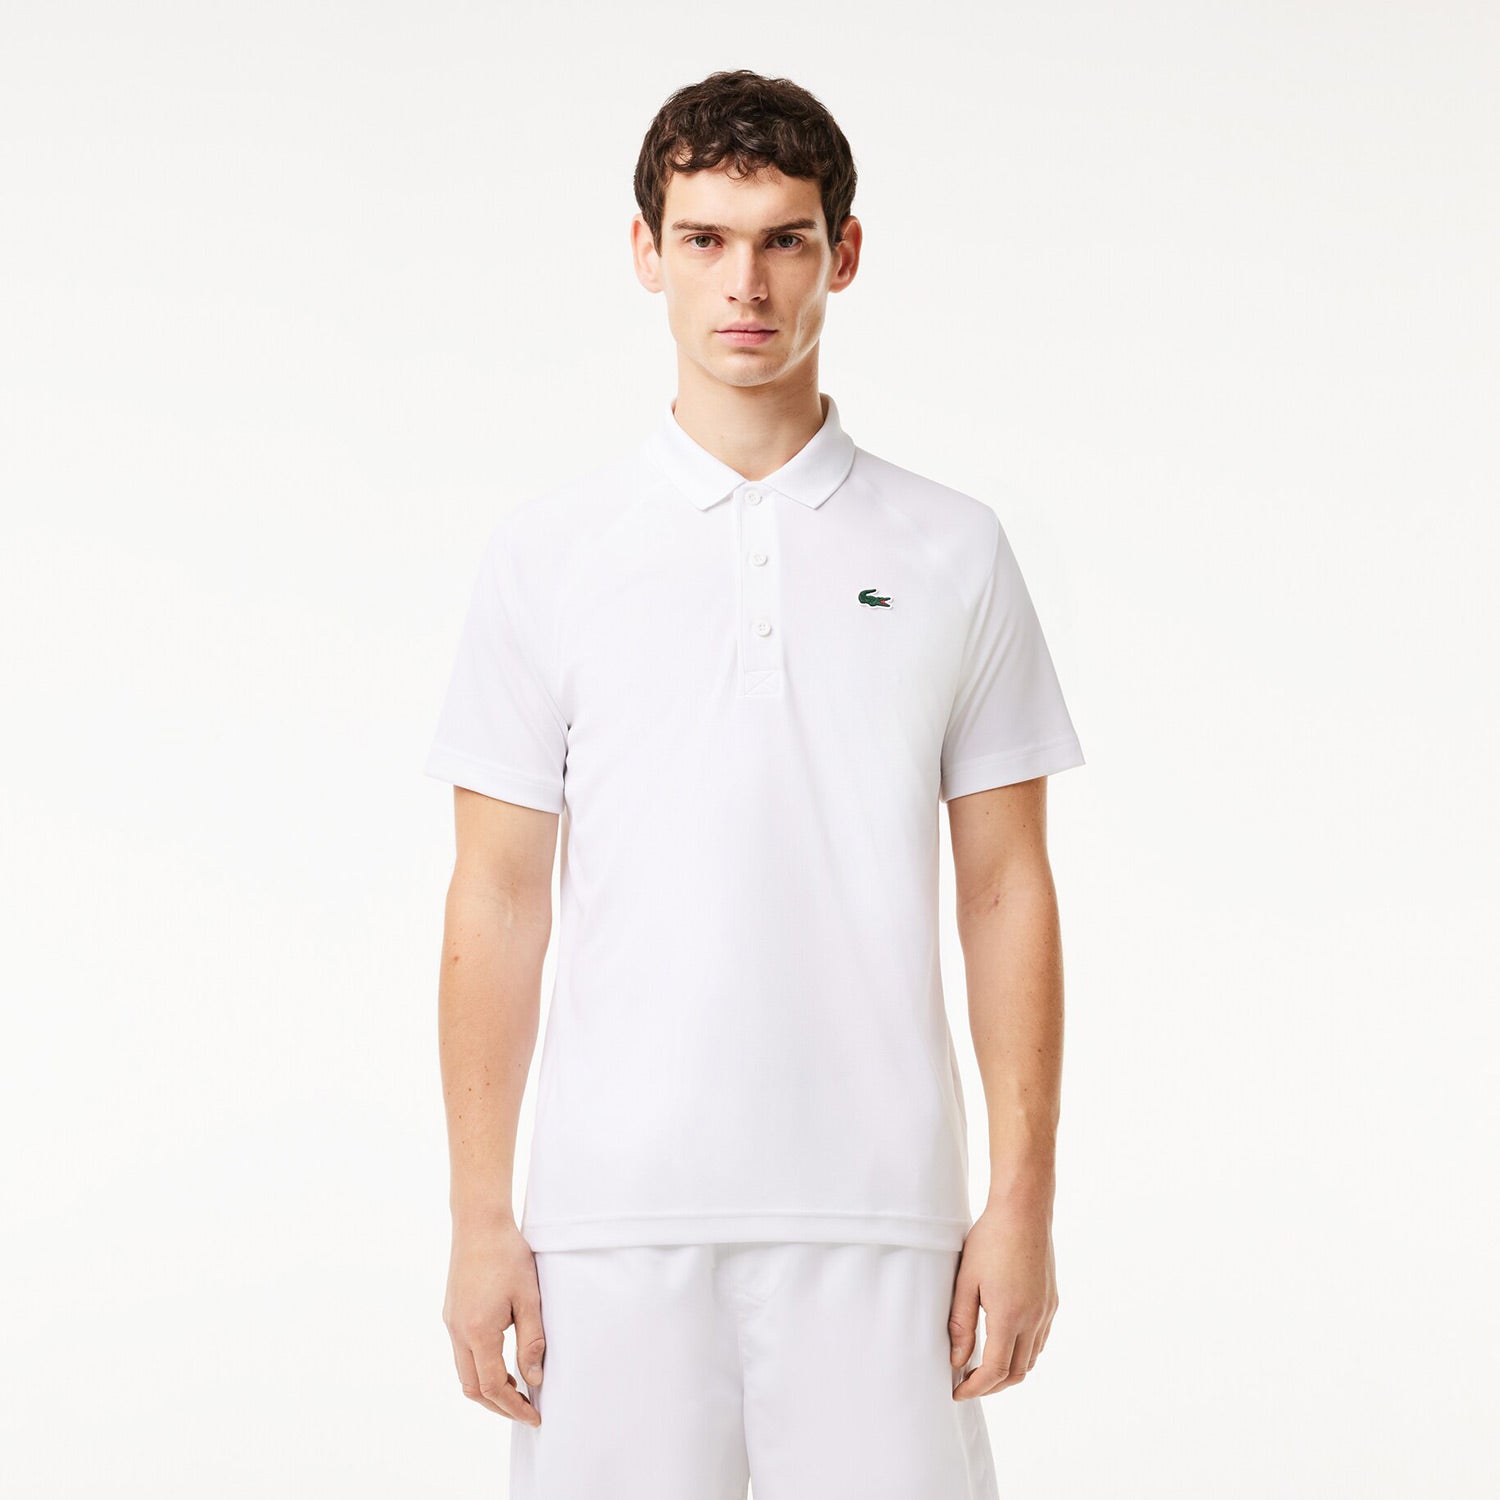 Lacoste Men's Ultra Dry Pique Tennis Polo - White (1)